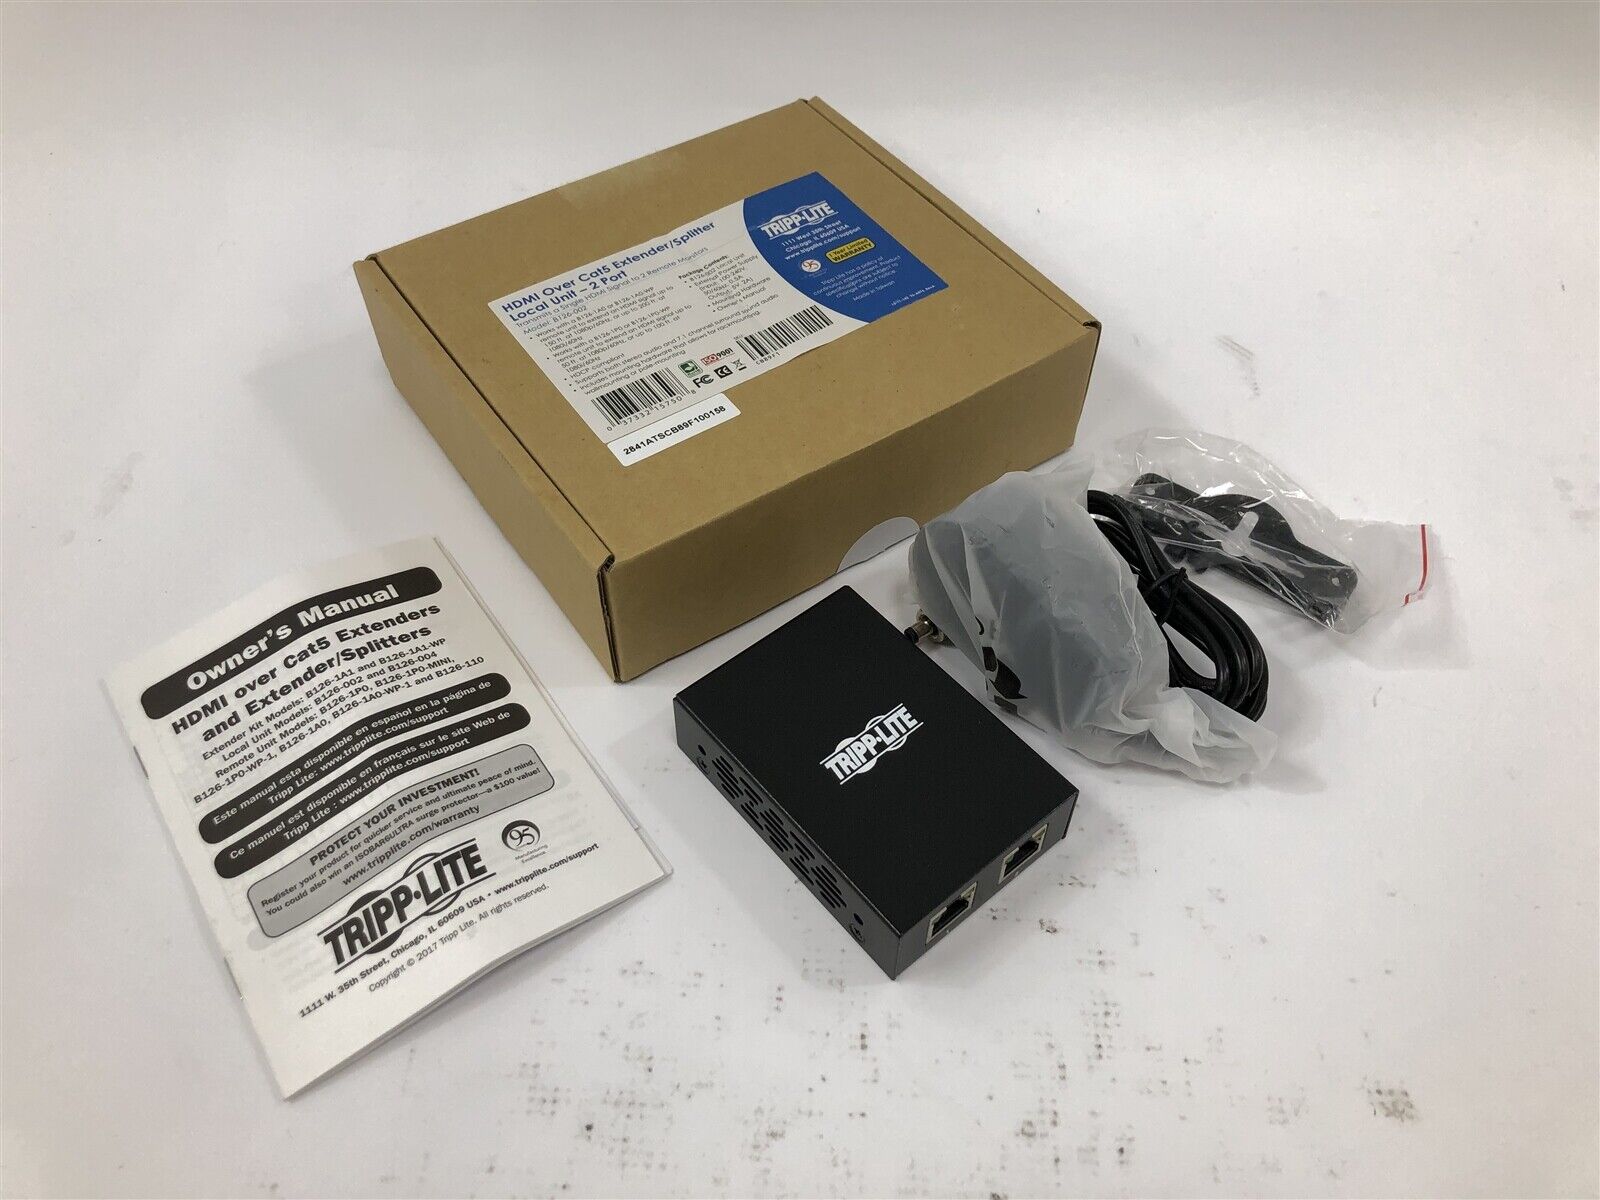 NEW Open Box Tripp-Lite B126-002 2-Port HDMI-Over-CAT5 Extender/Splitter with AC